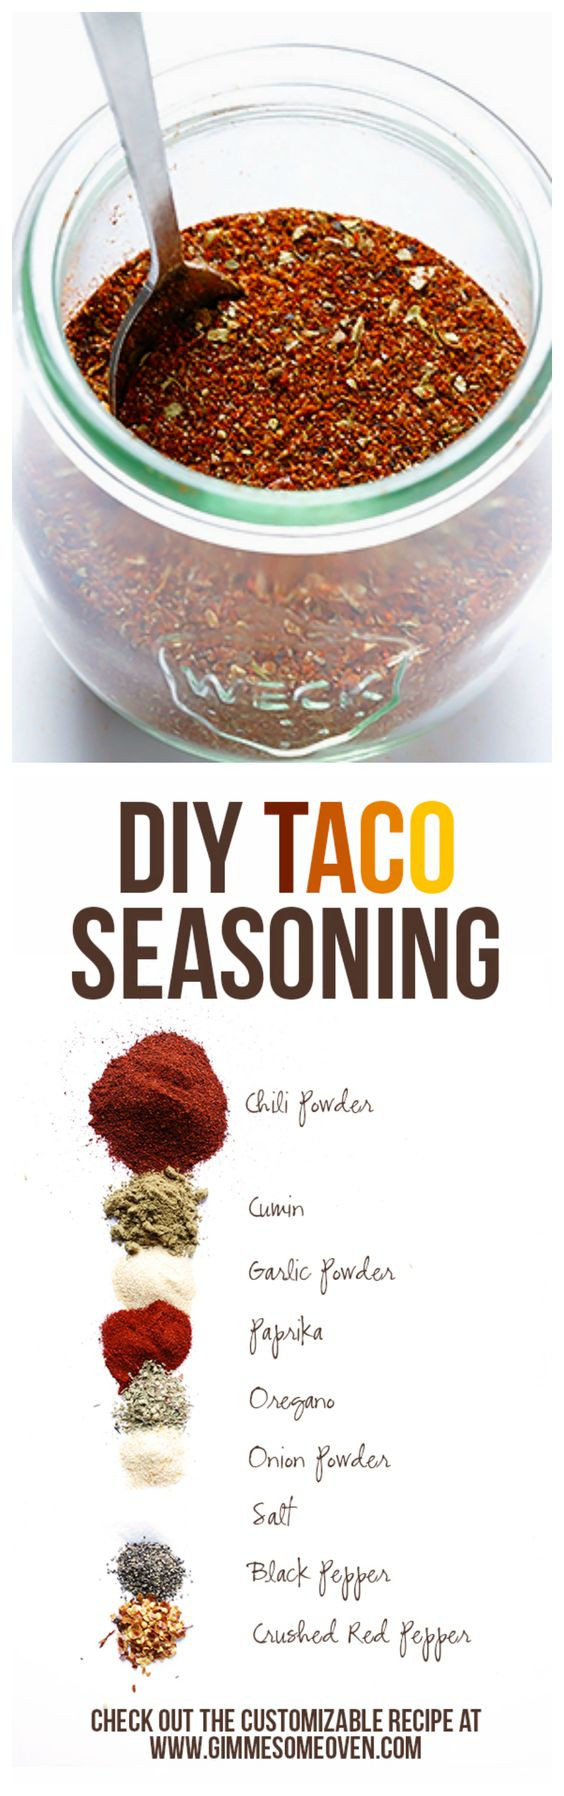 Best ideas about DIY Taco Seasoning
. Save or Pin Homemade Taco Seasoning Recipe Now.